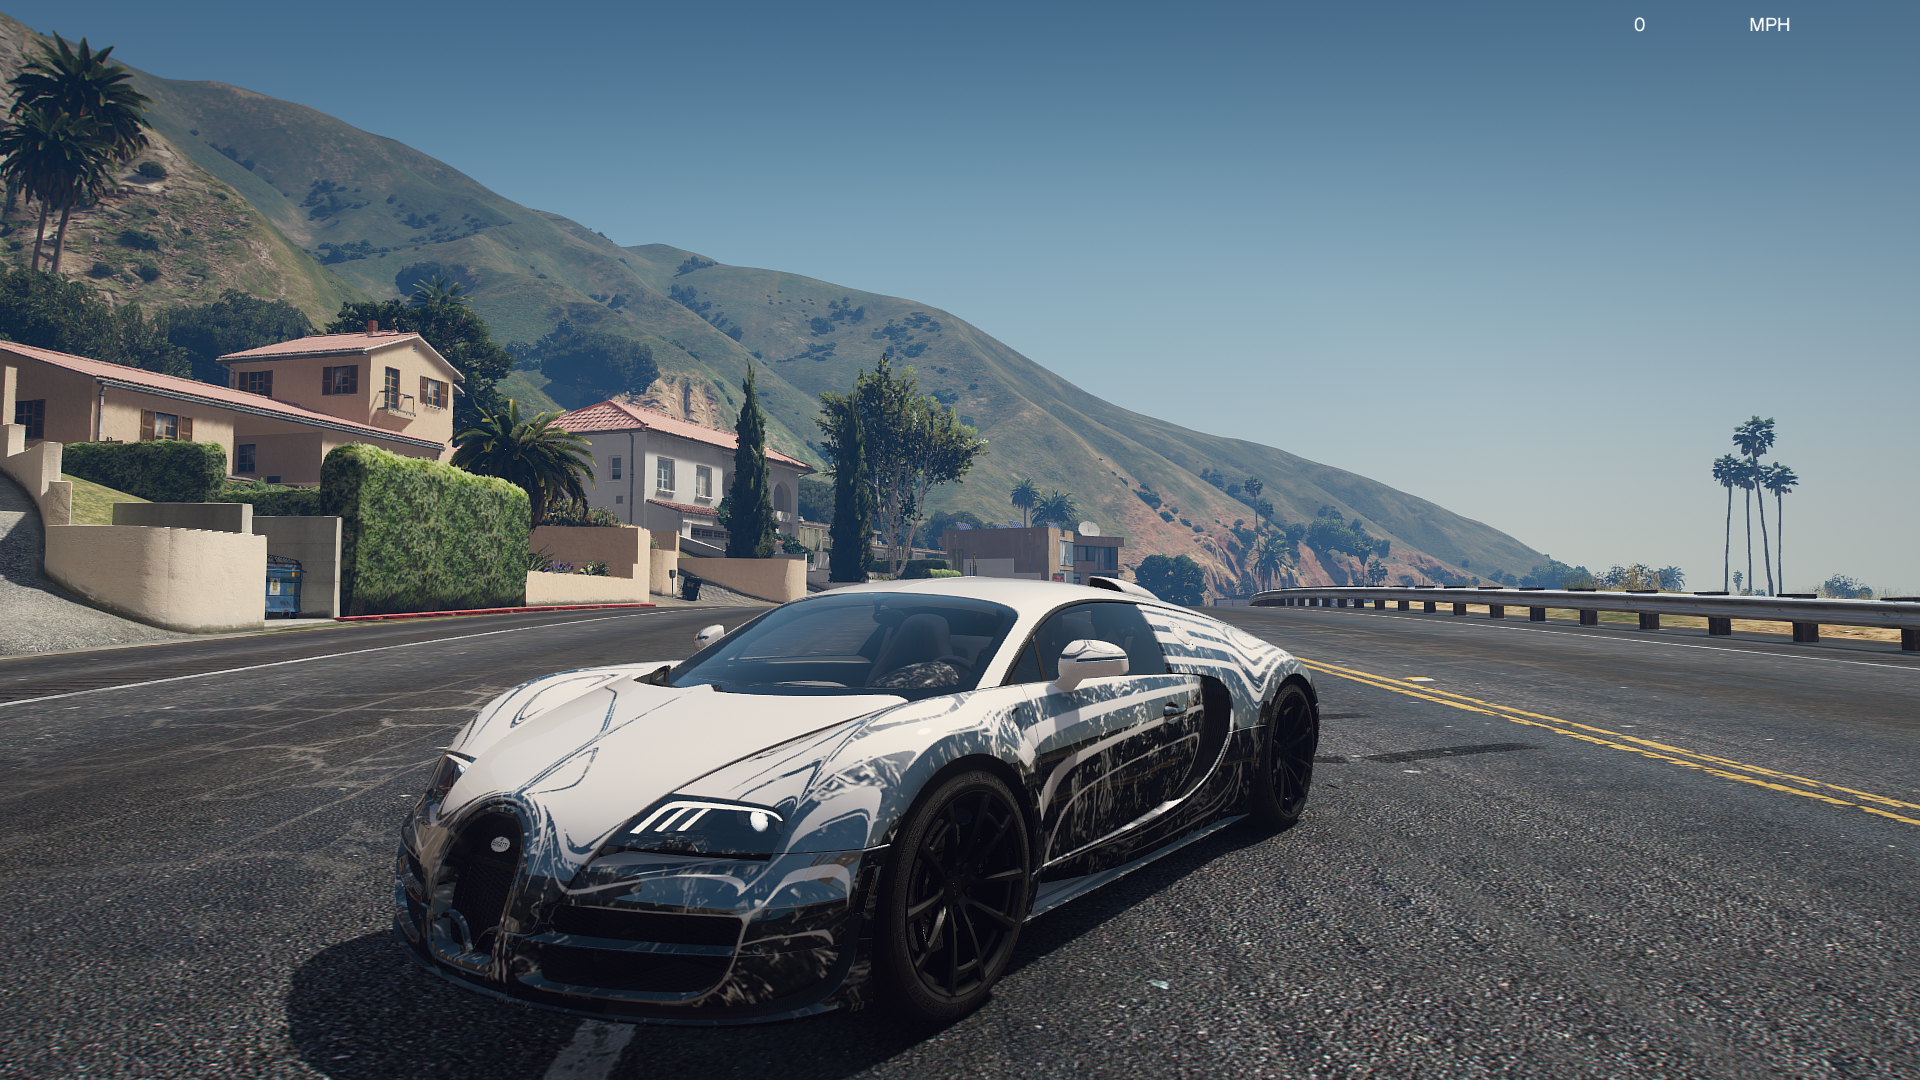 NaturalVision Evolved NVE Grand Theft Auto V Grand Theft Auto PC Gaming Bugatti Car Los Santos Los A 1920x1080